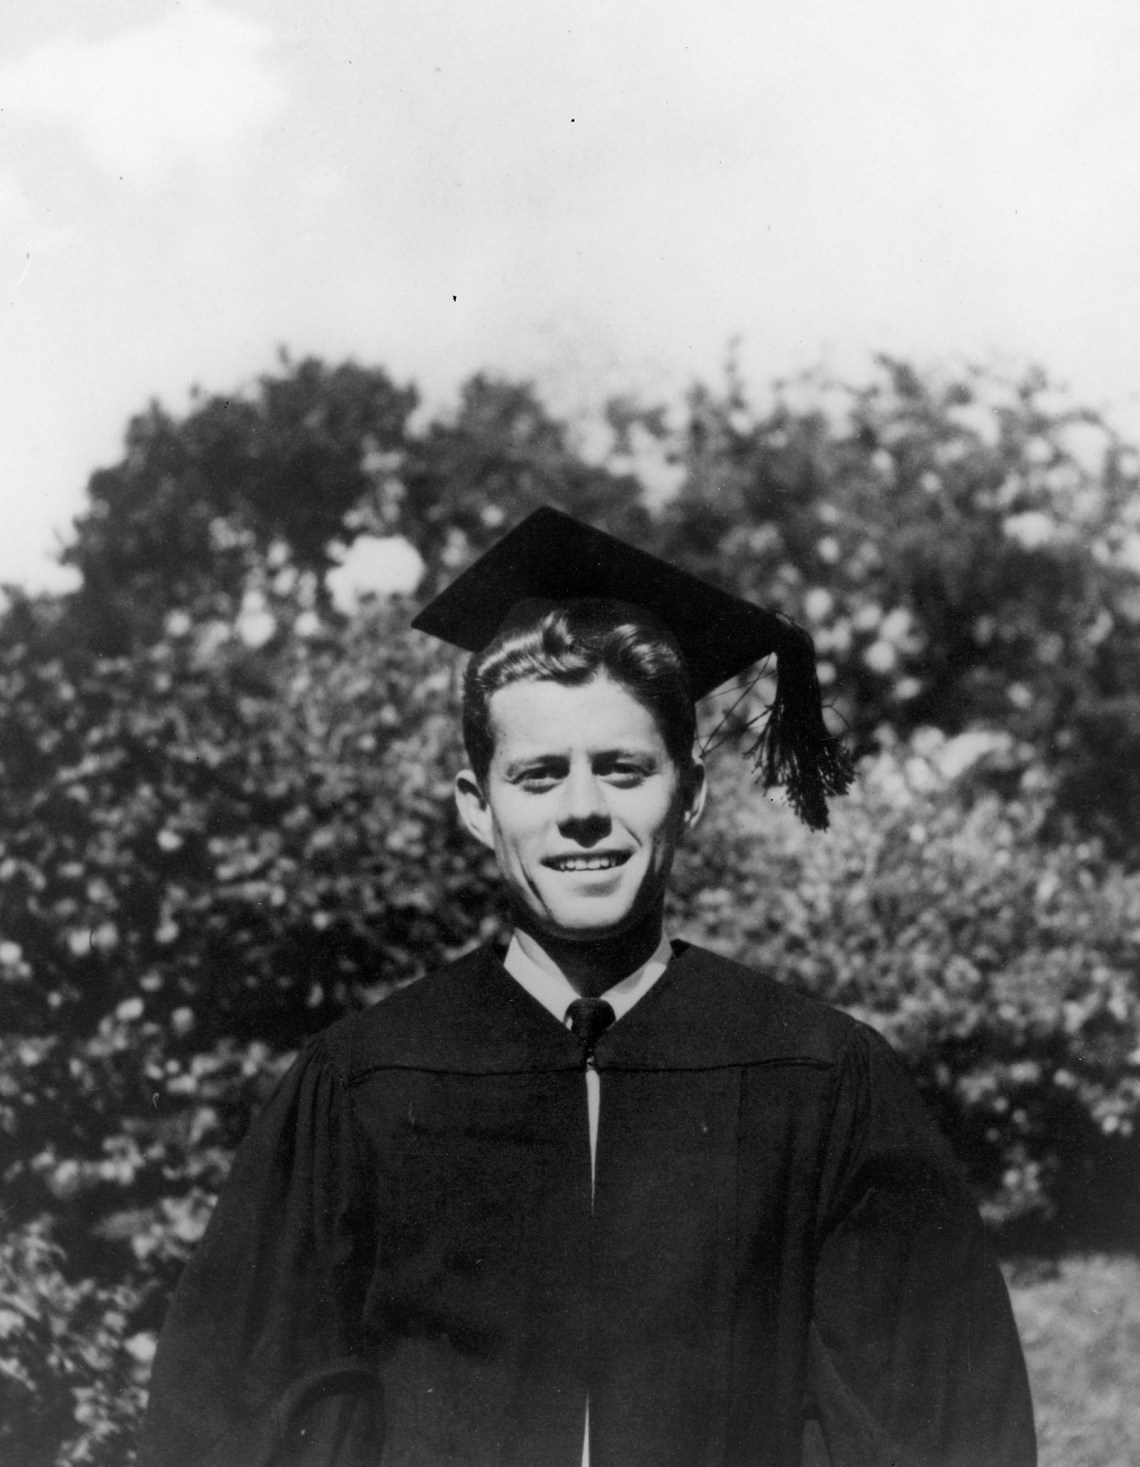 John F. Kennedy at his graduation from Harvard